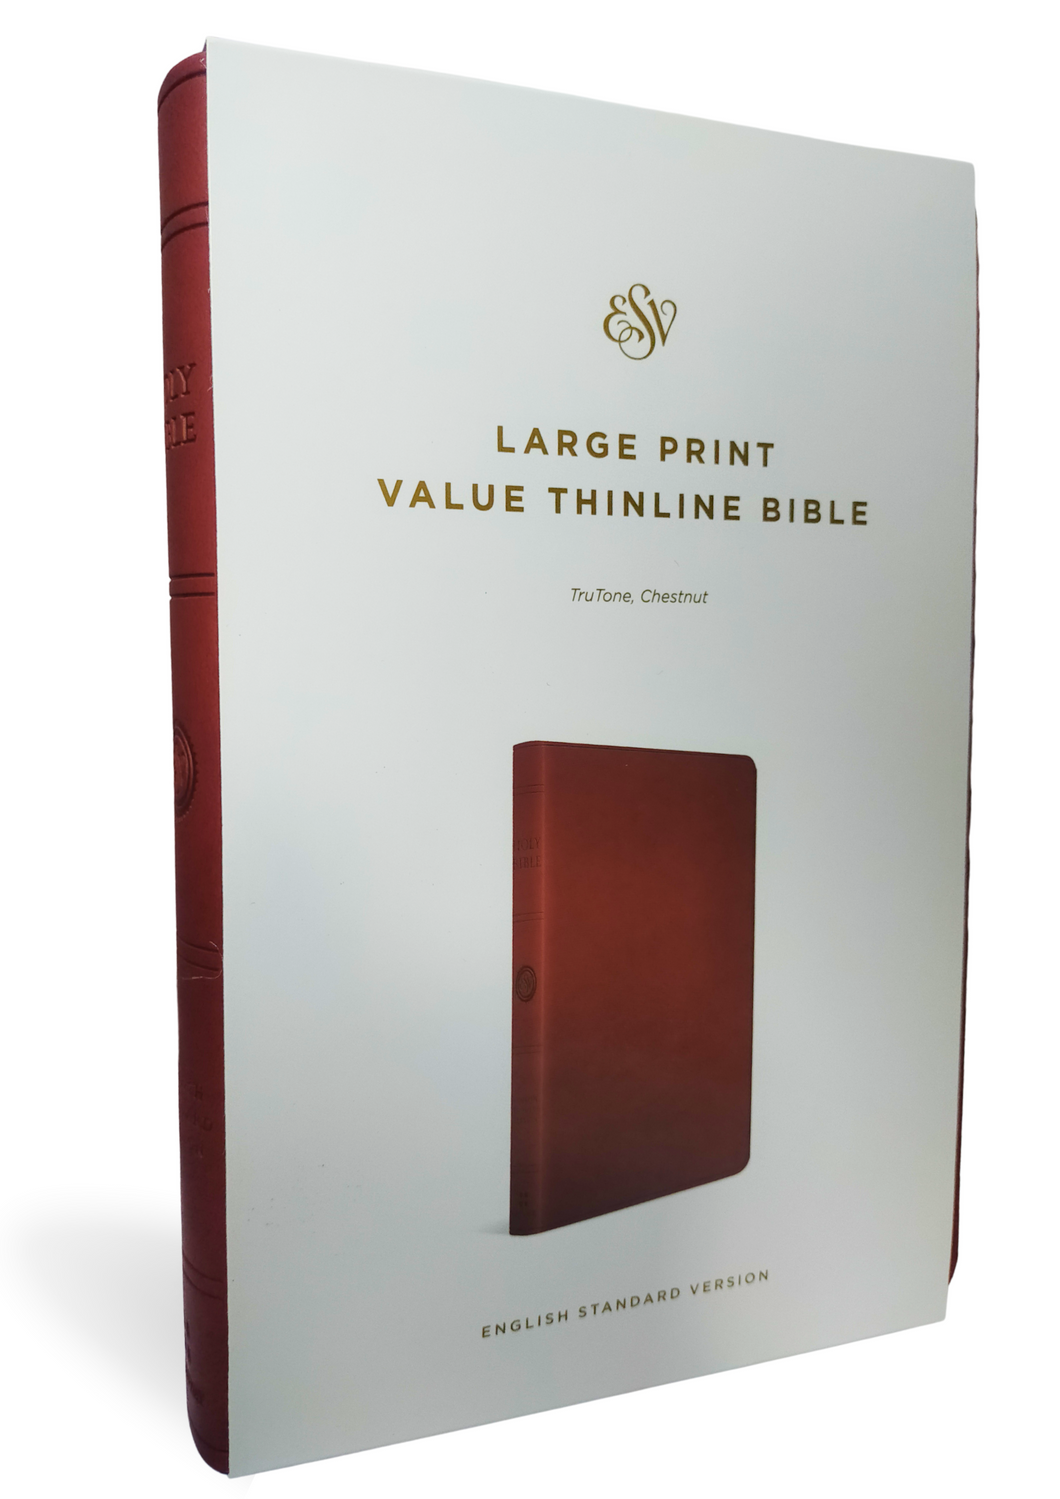 ESV Large Print ValueThinline Bible: Esv Value Thinline Bible Trutone, chestnut Imitation Leather – Import,